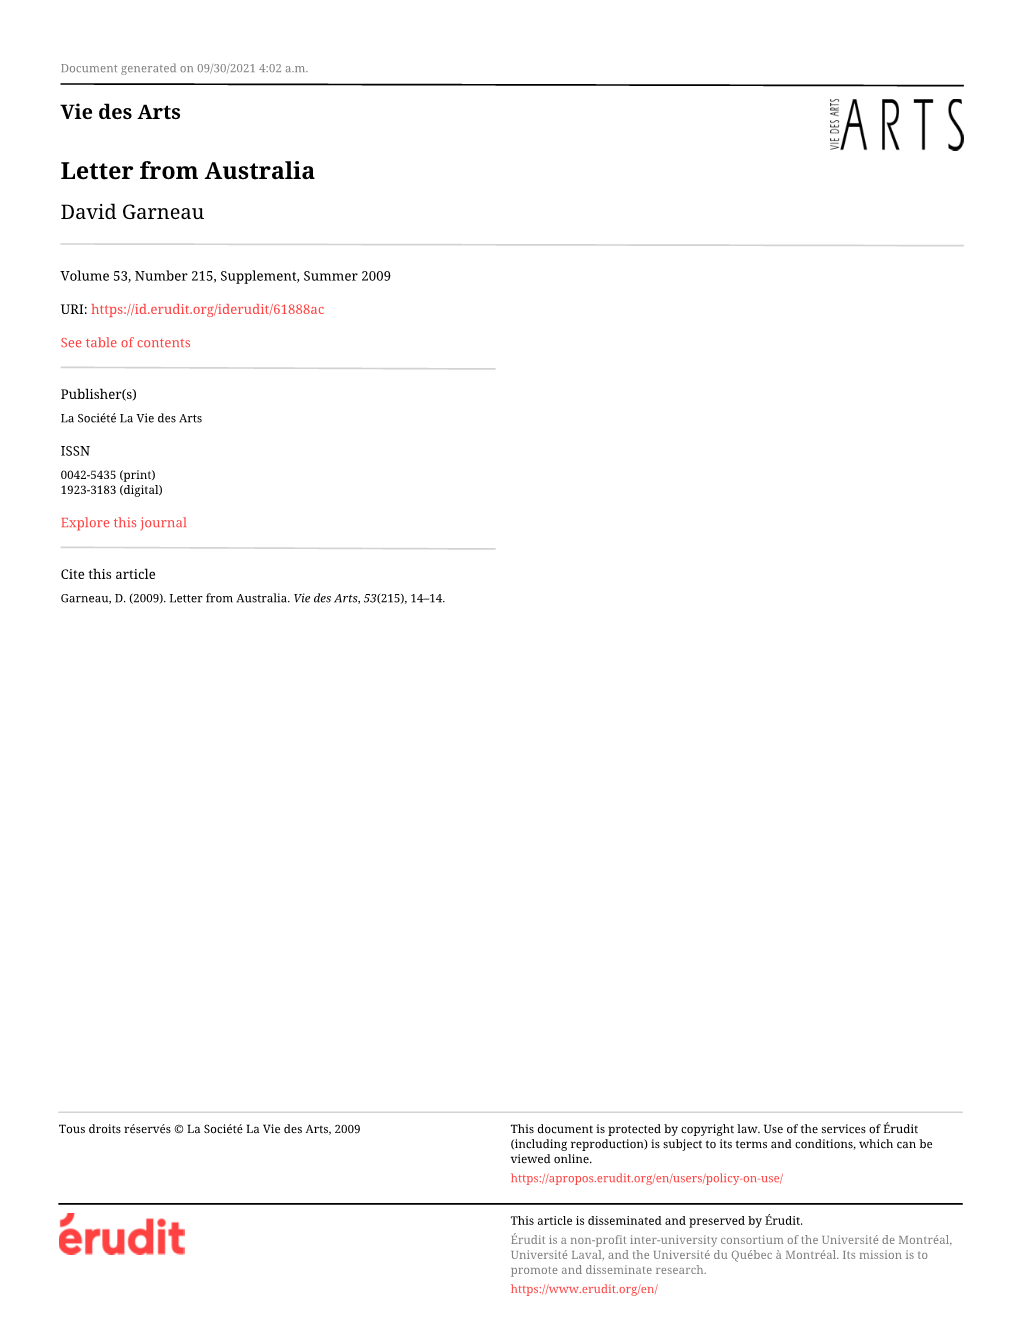 Letter from Australia David Garneau